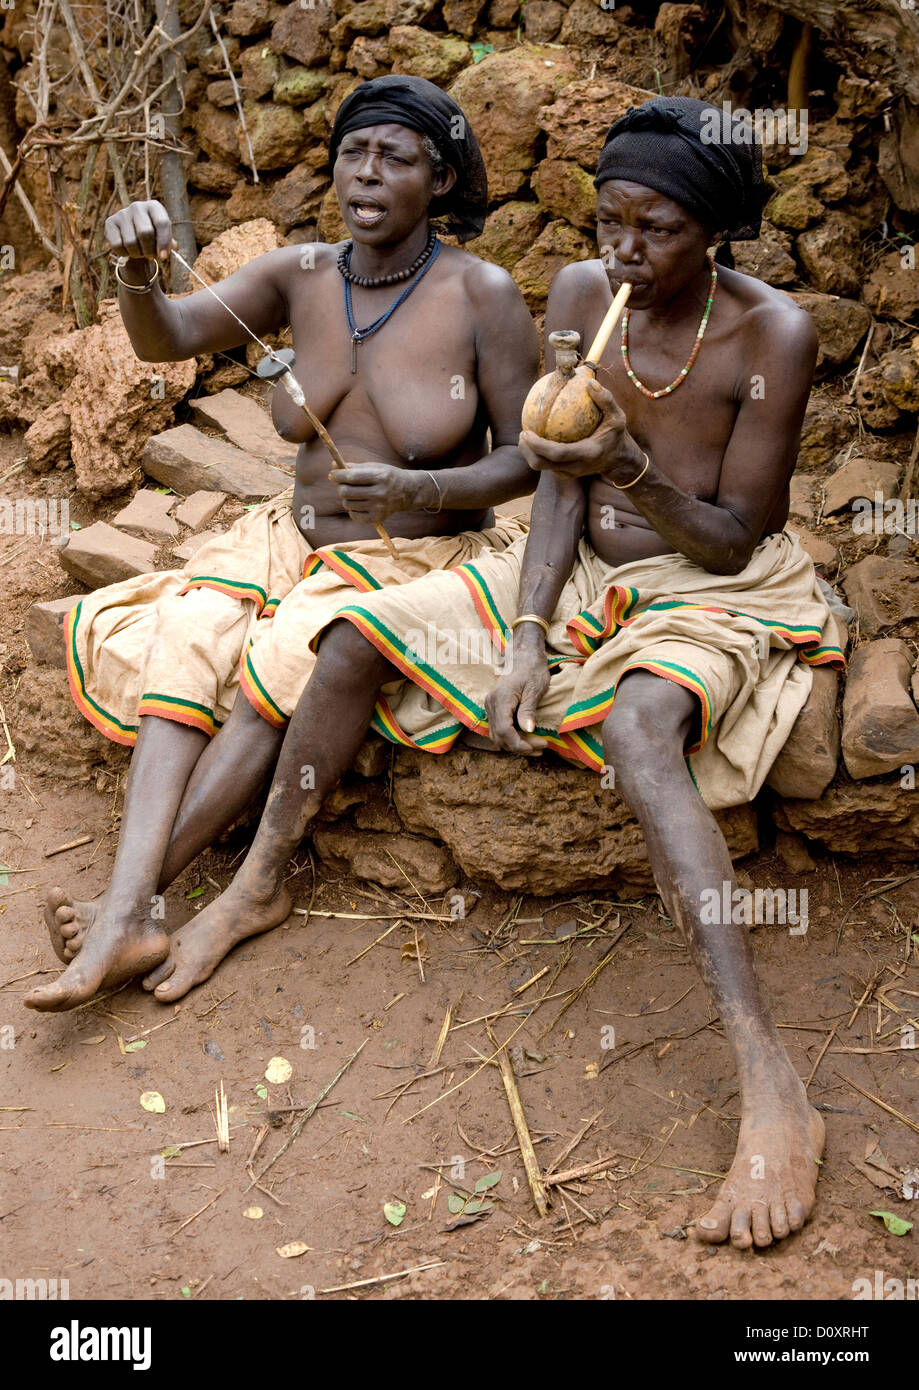 Nudity tribe